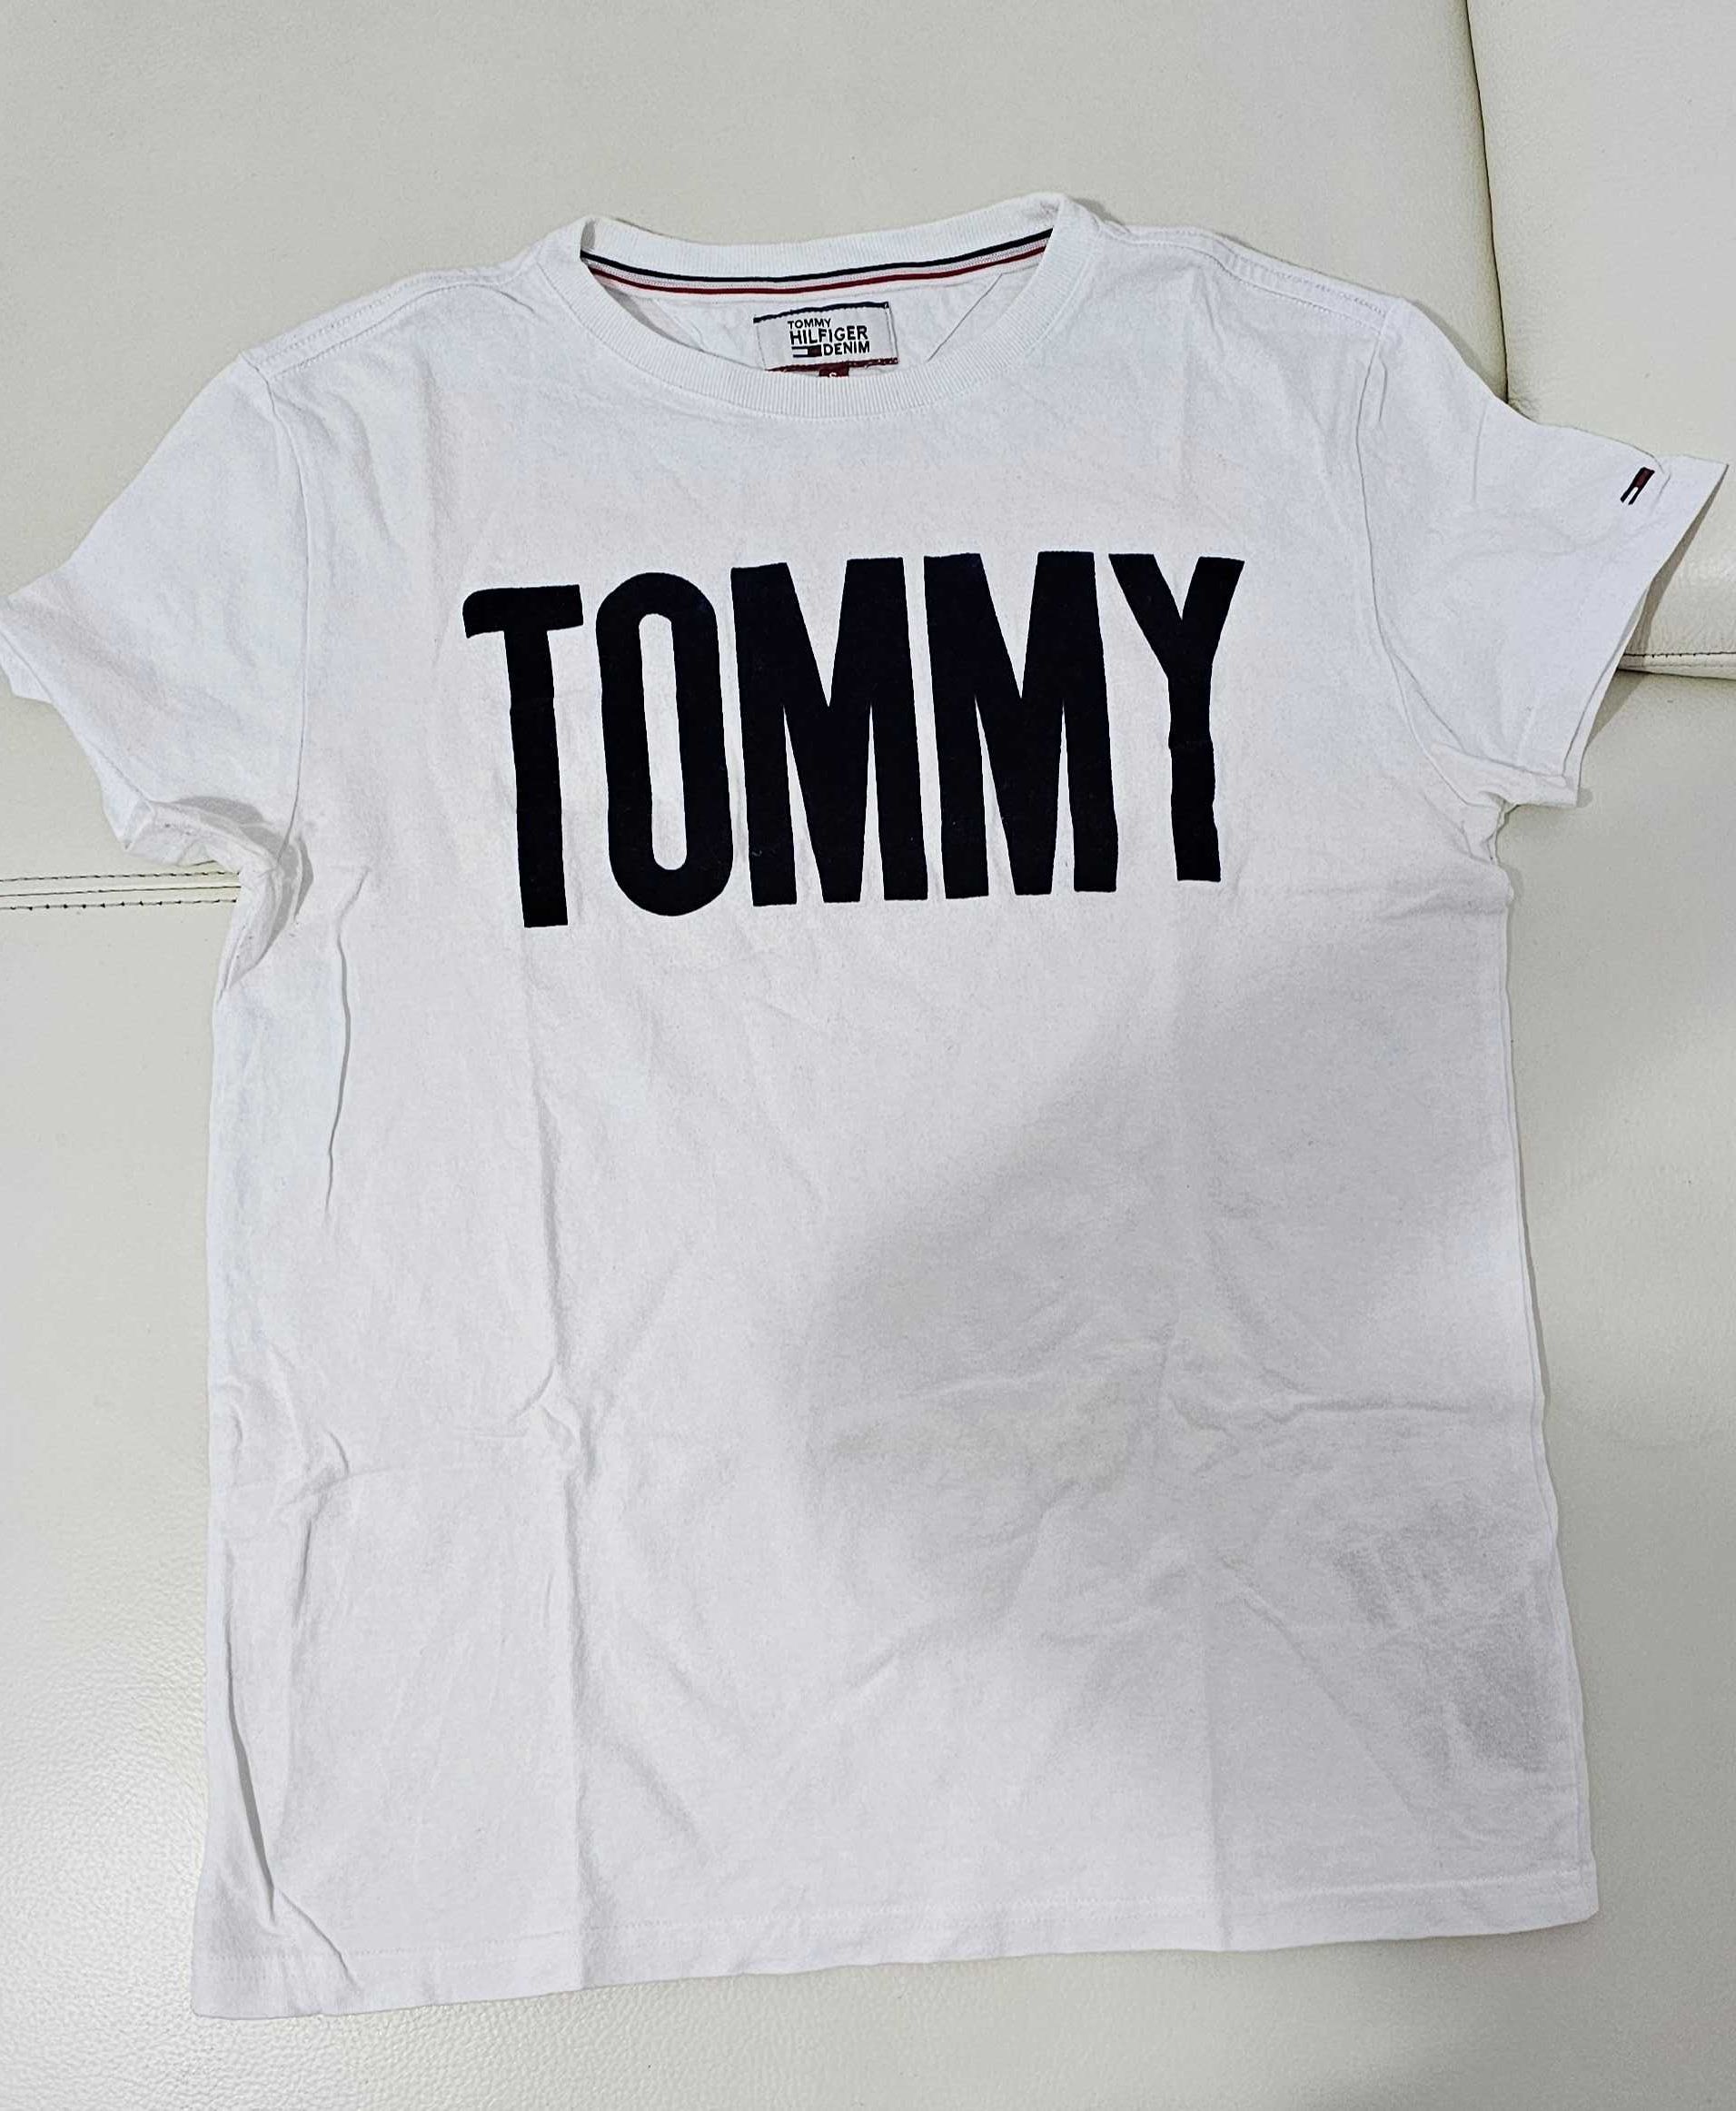 2x Tricouri bărbătesti Tommy Hilfiger mărime S alb și albastru